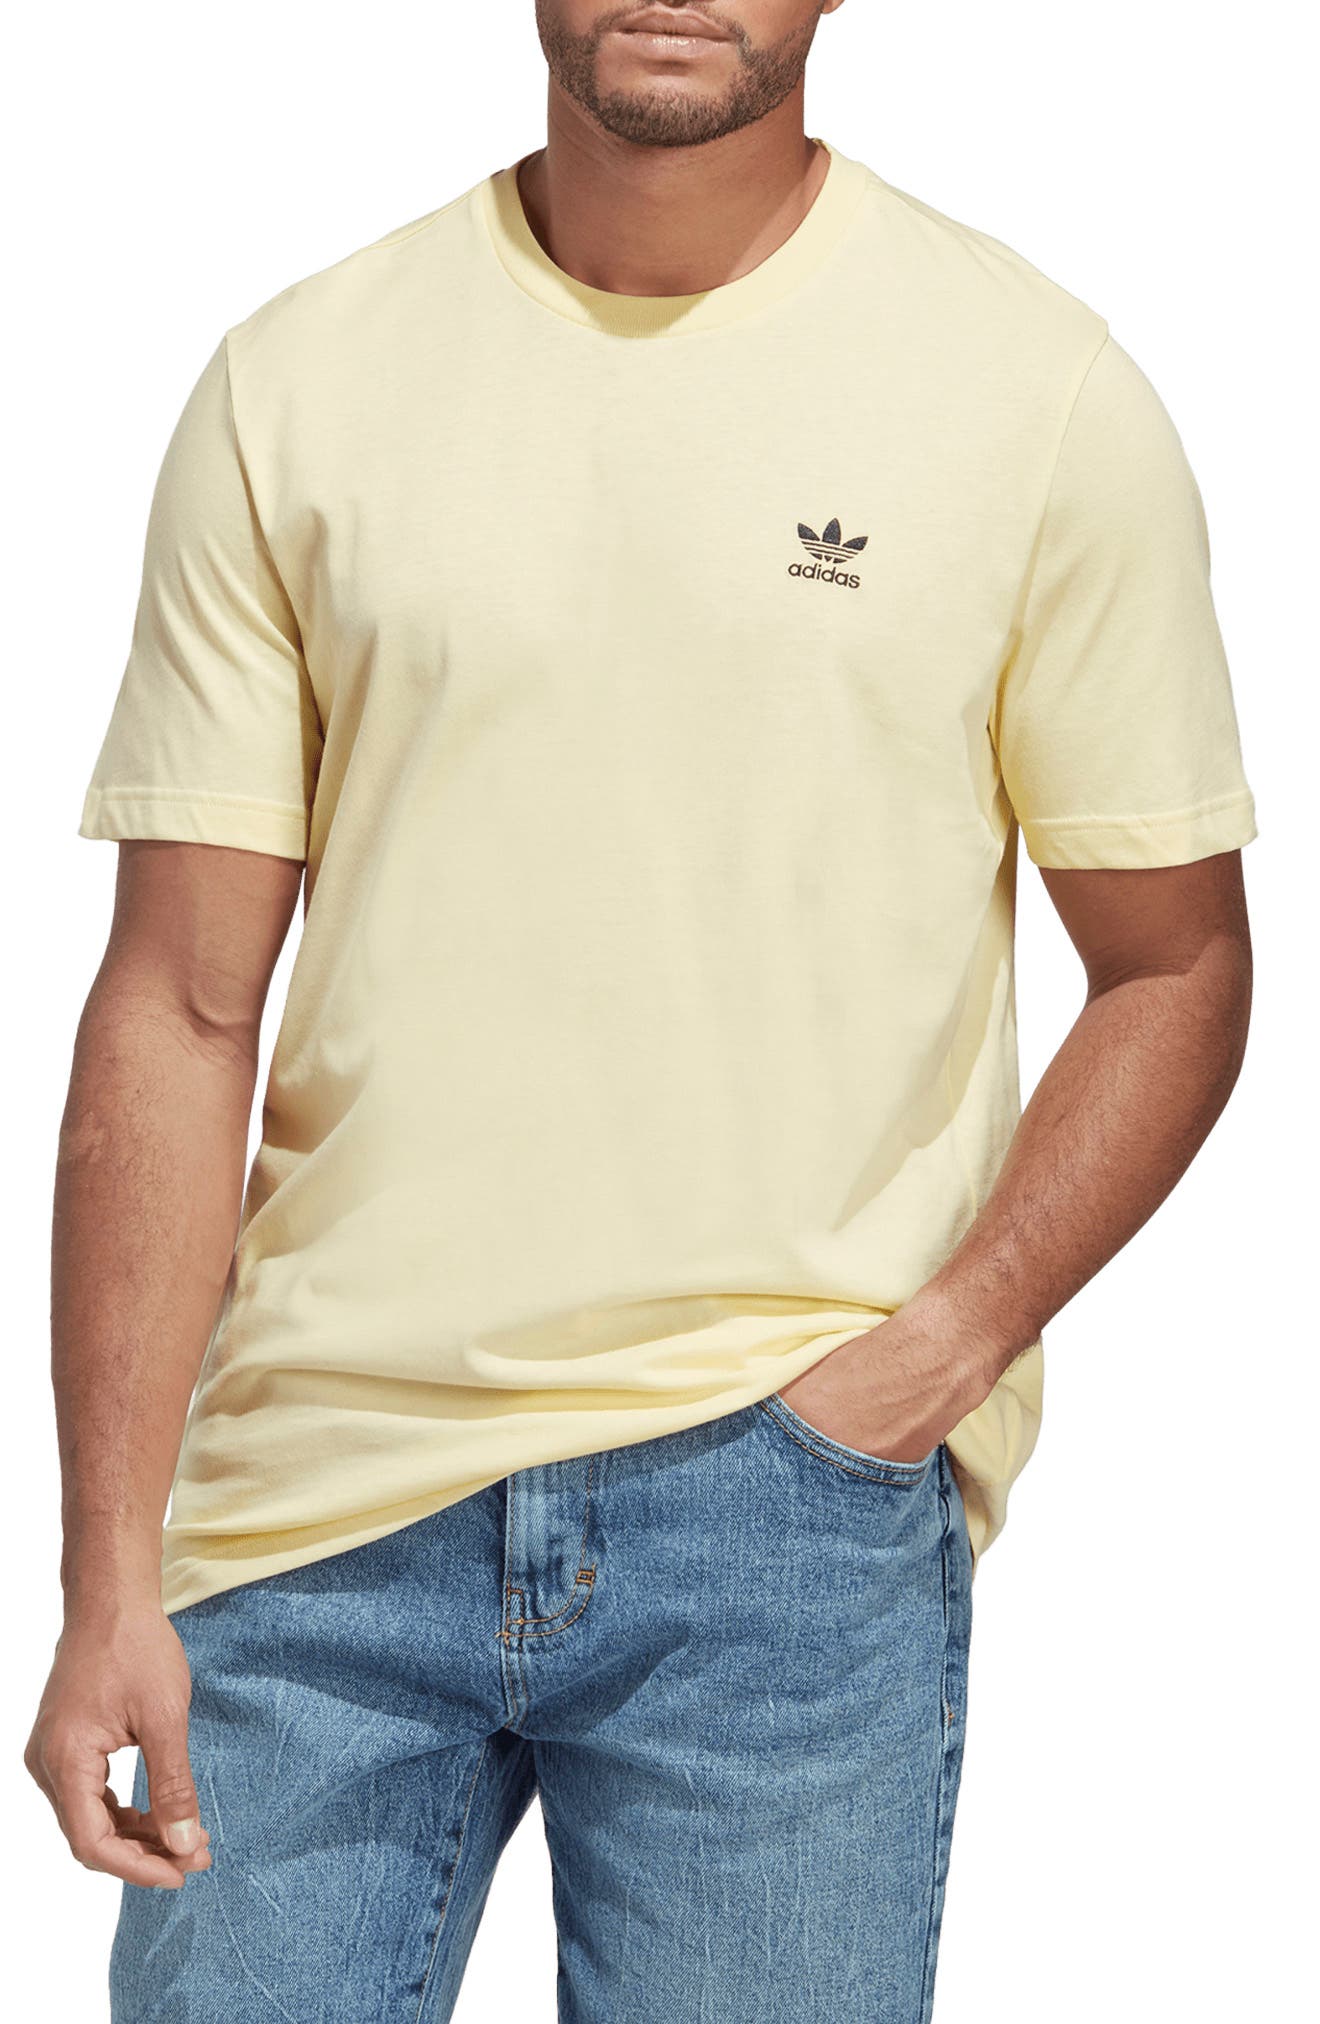 adidas Originals Essential Solid T-Shirt in Blue Dawn | Smart Closet